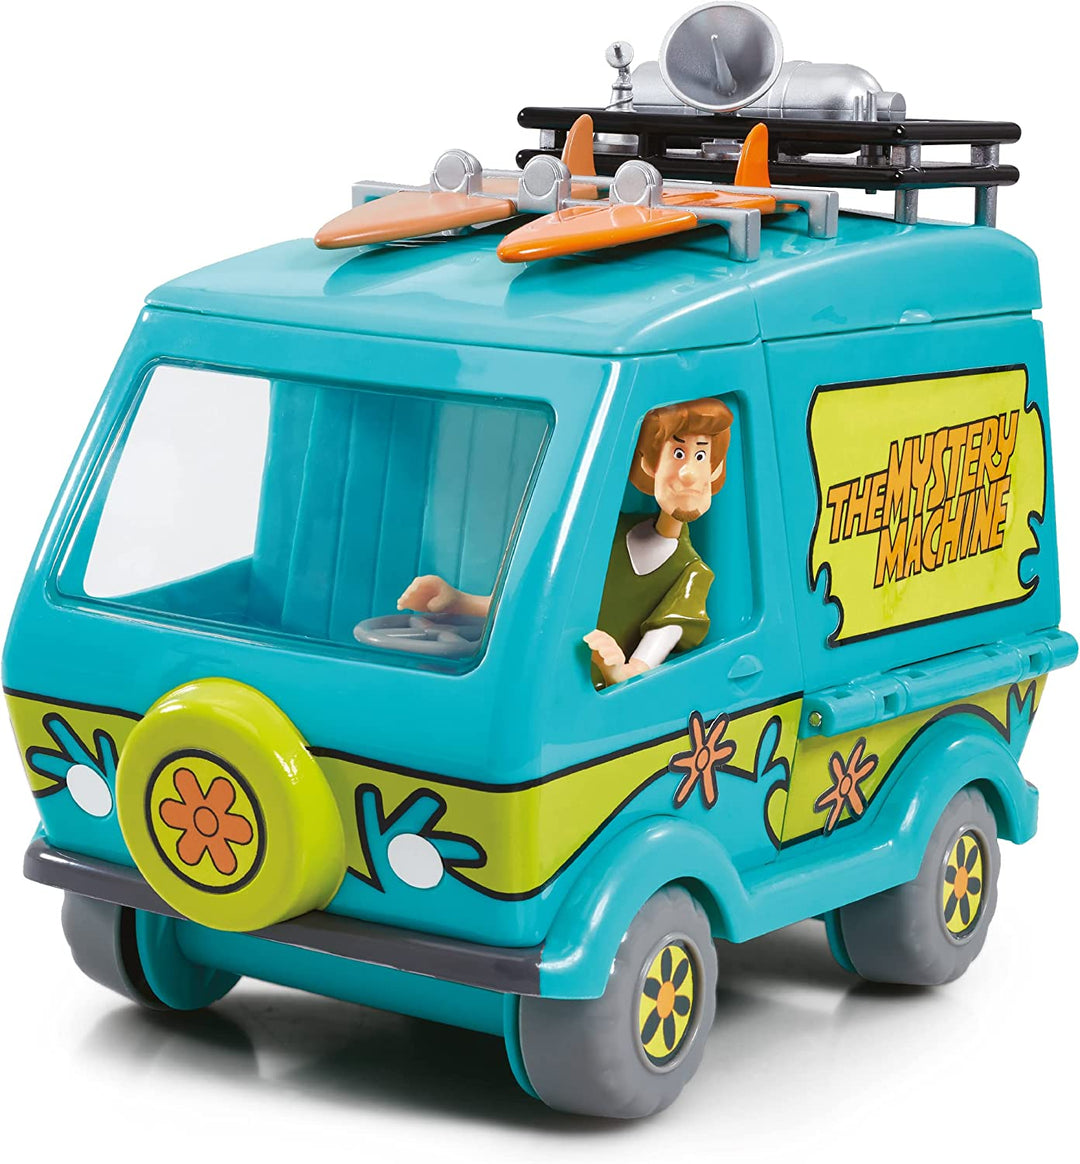 Scooby Doo 07587 Mystery Machine PLAYSET